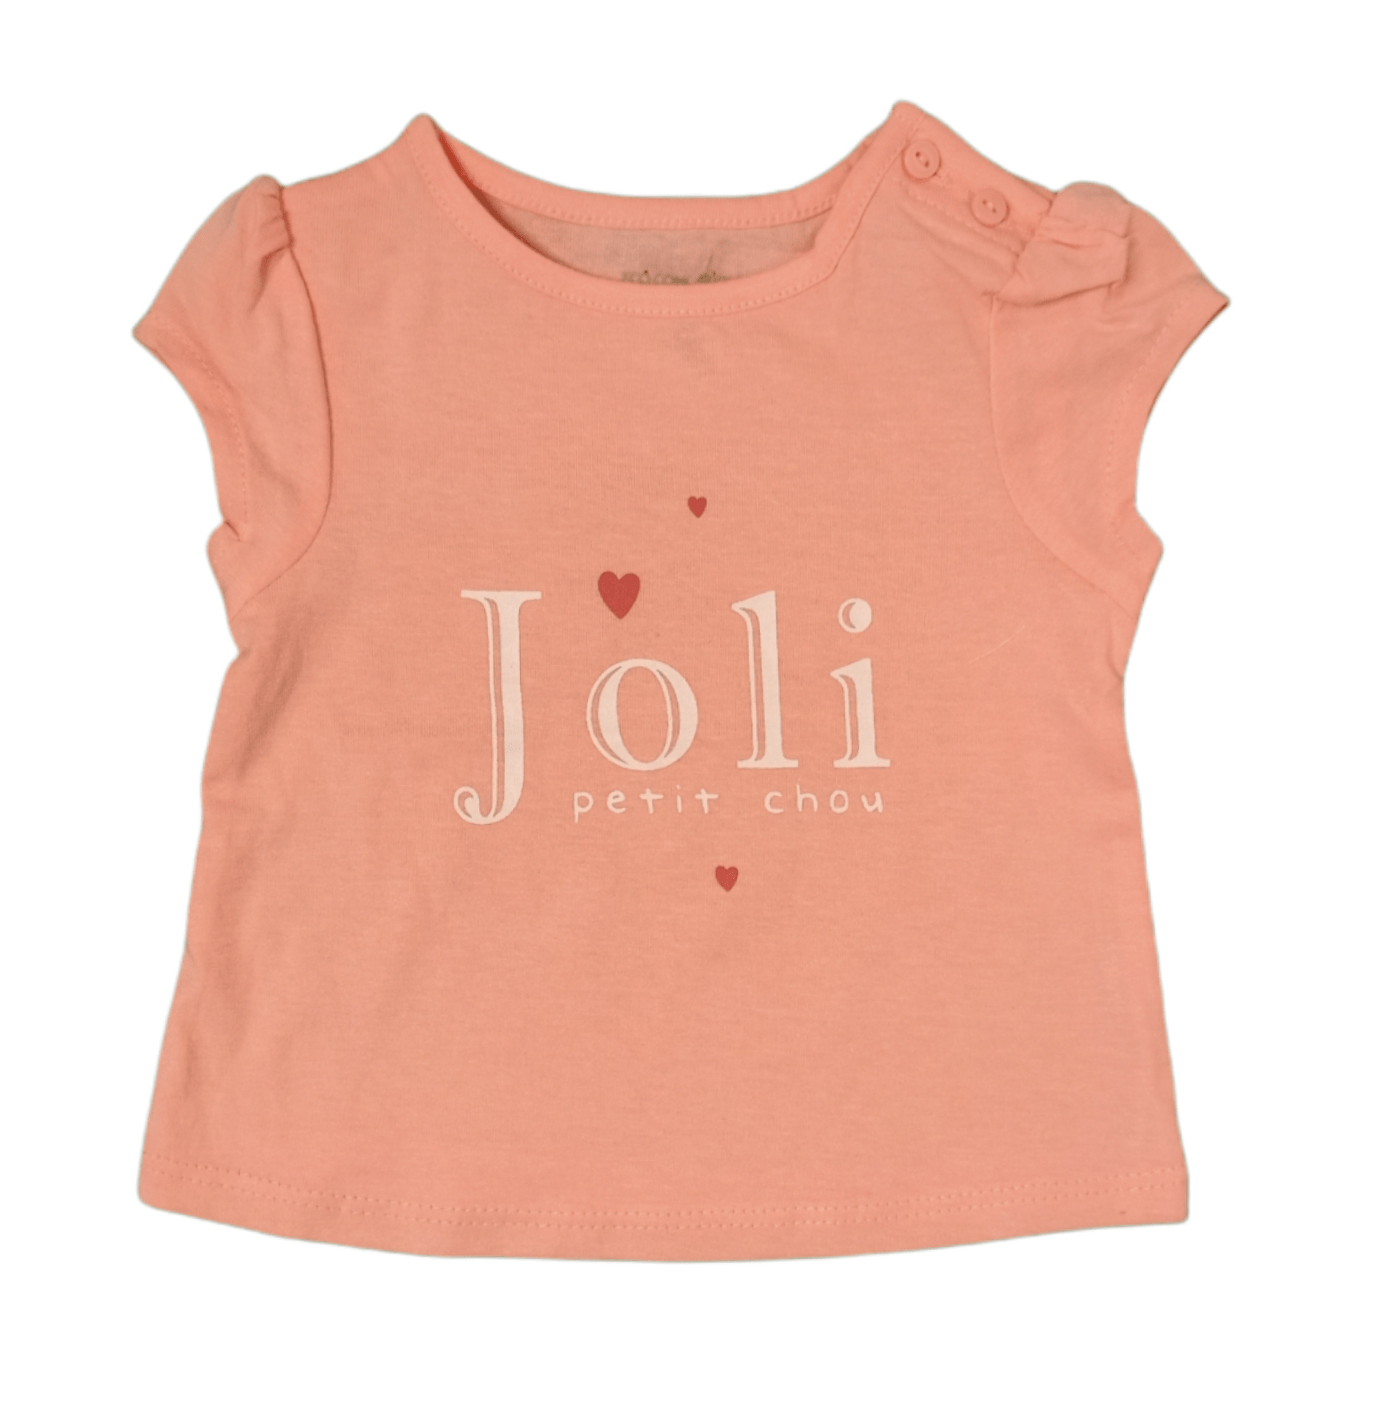 ElOutlet Babies Baby Girl Shirt - Pink Joli